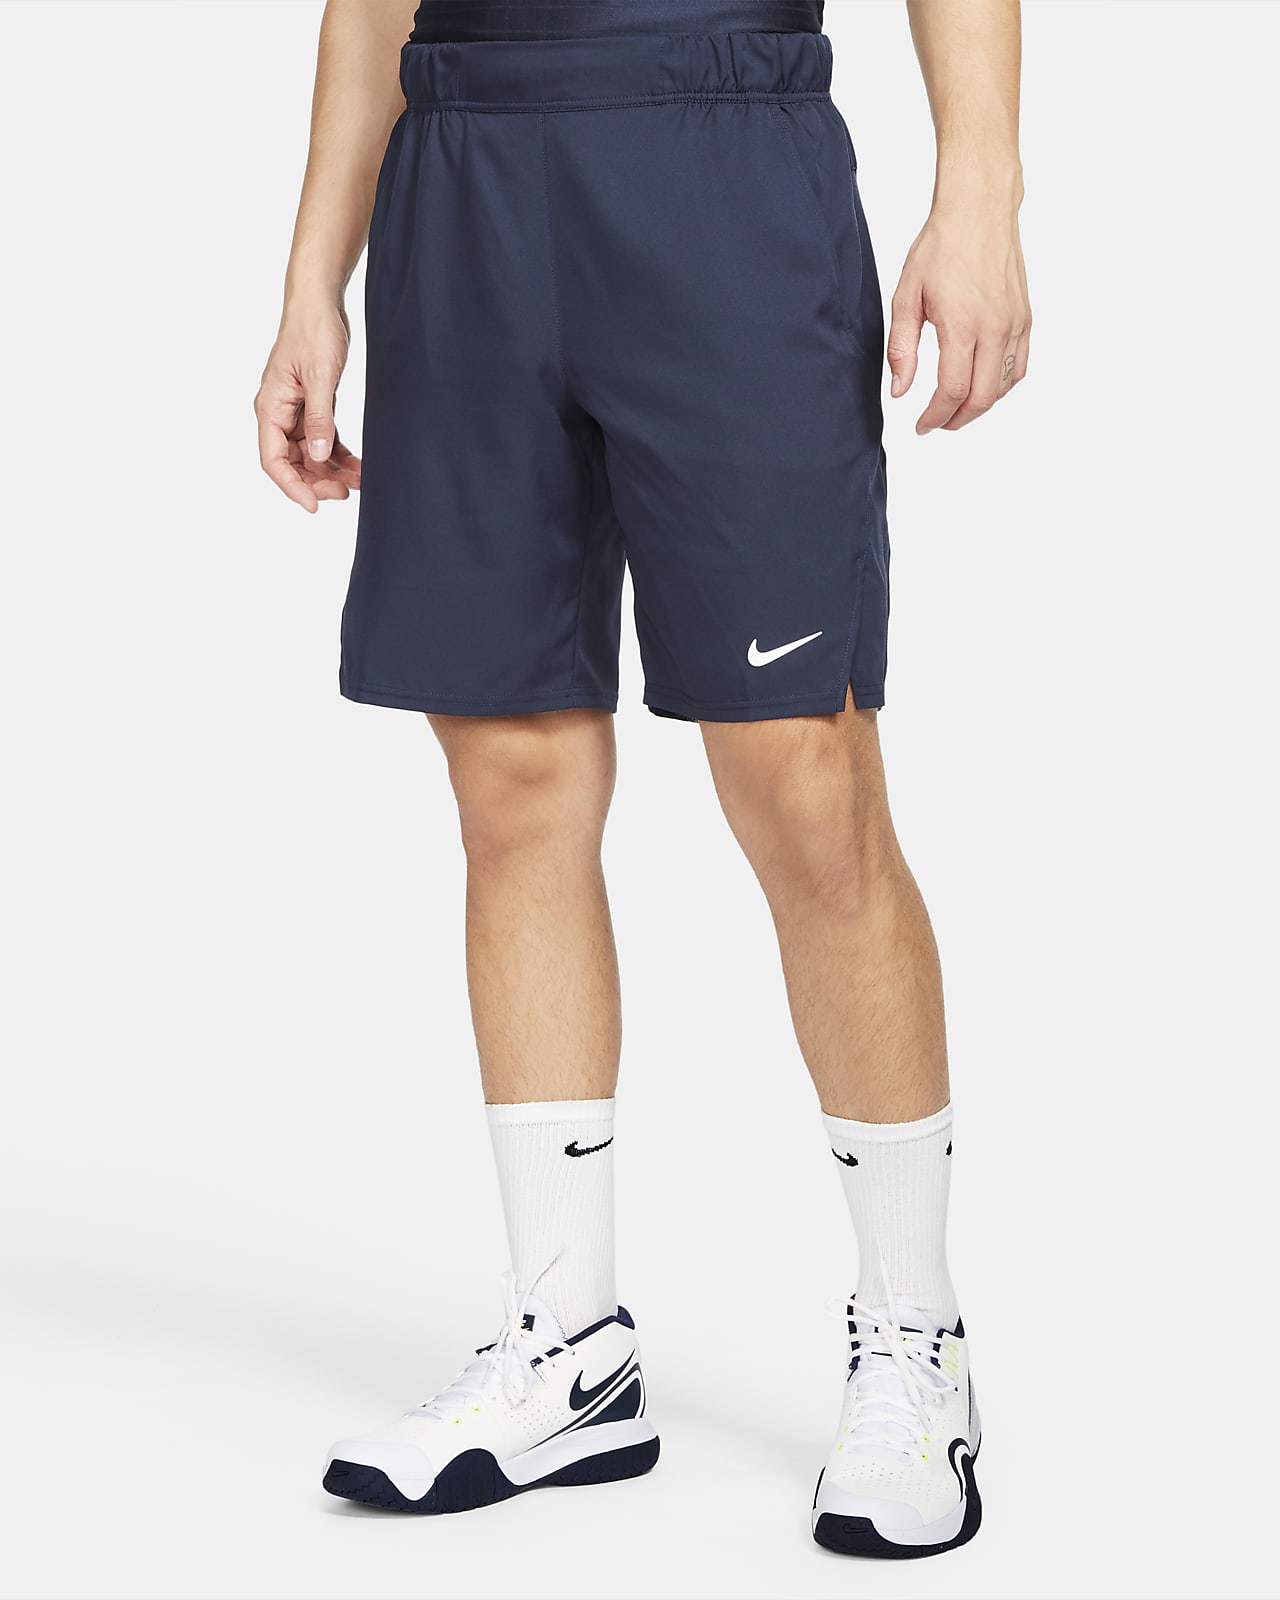 Nike Mens Tennis Pants - Obsidian/White 